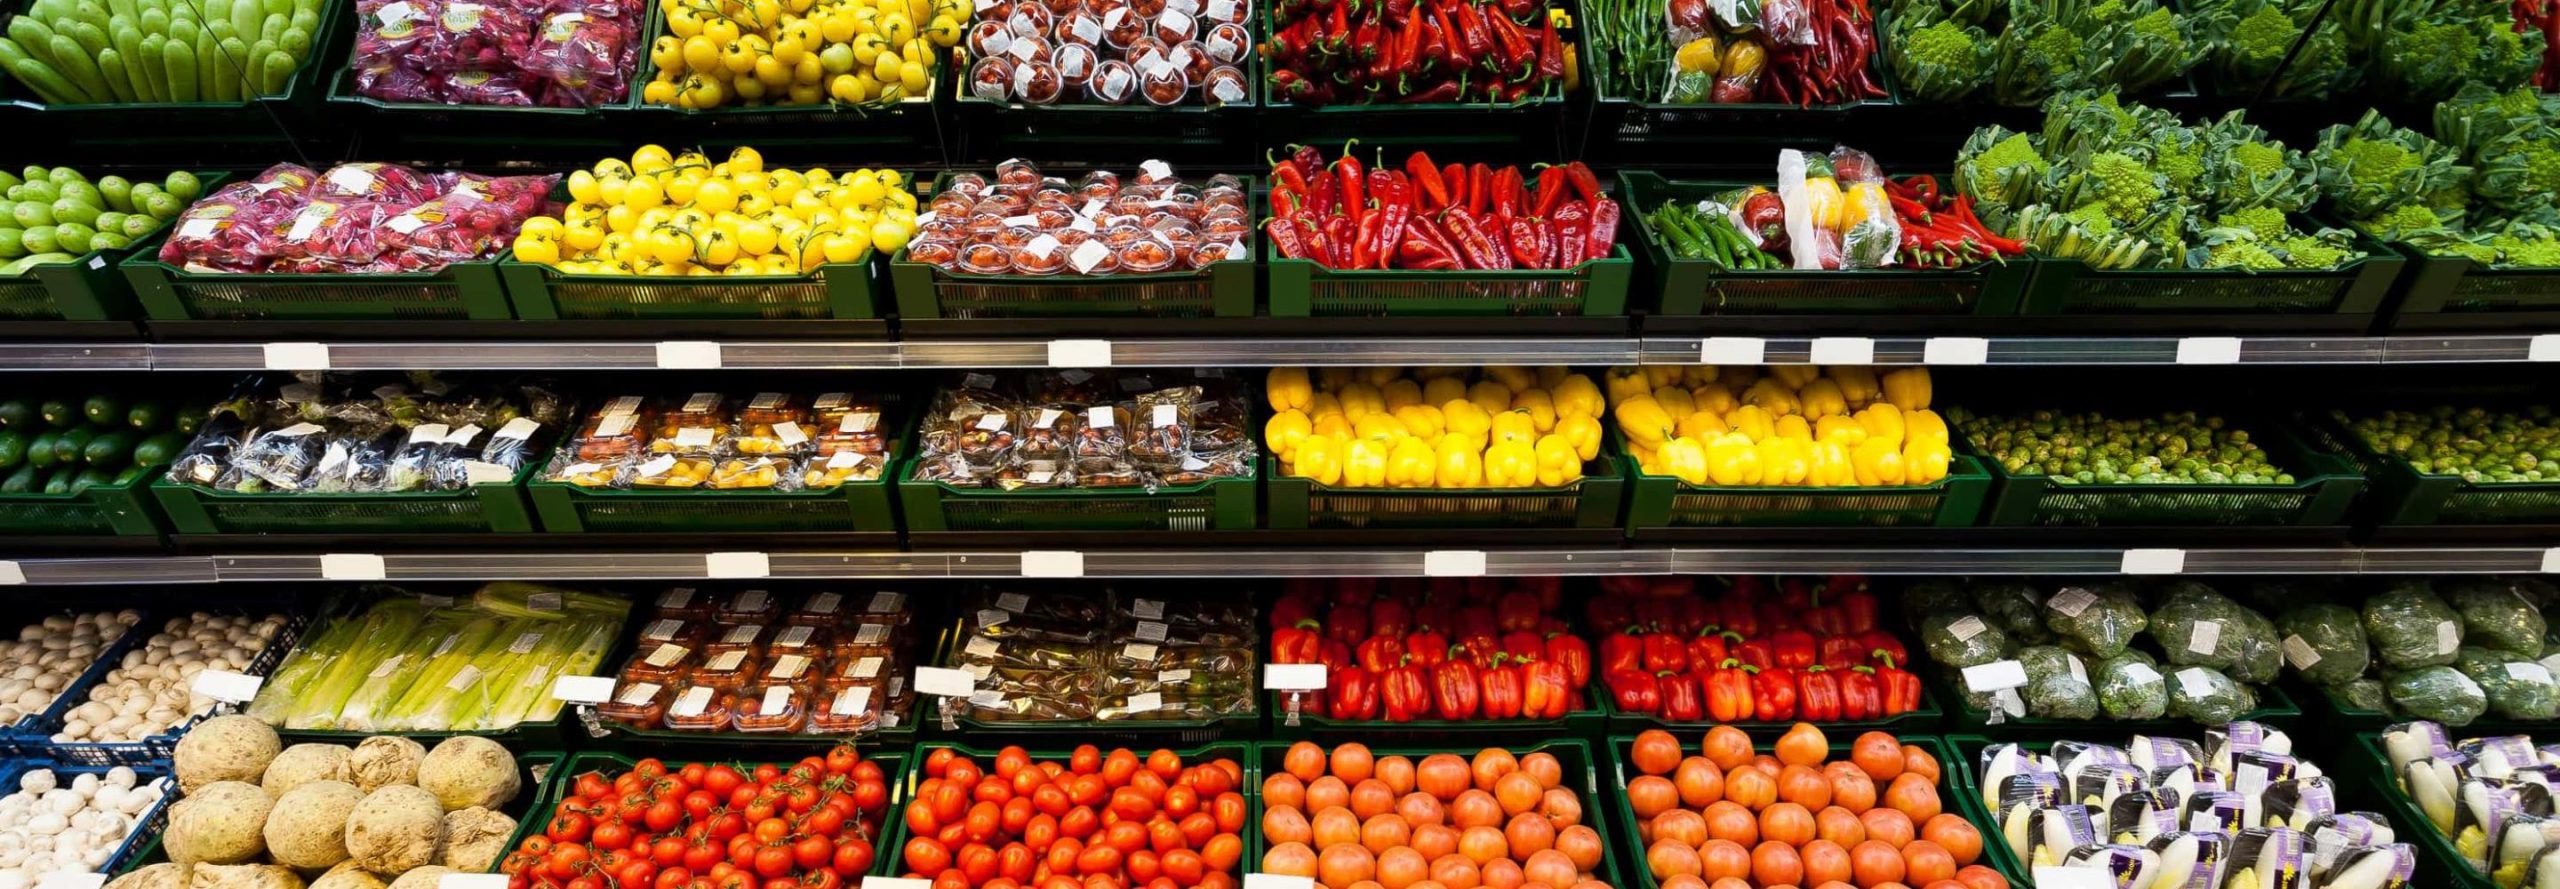 Vegetables in supermarket's shelves.